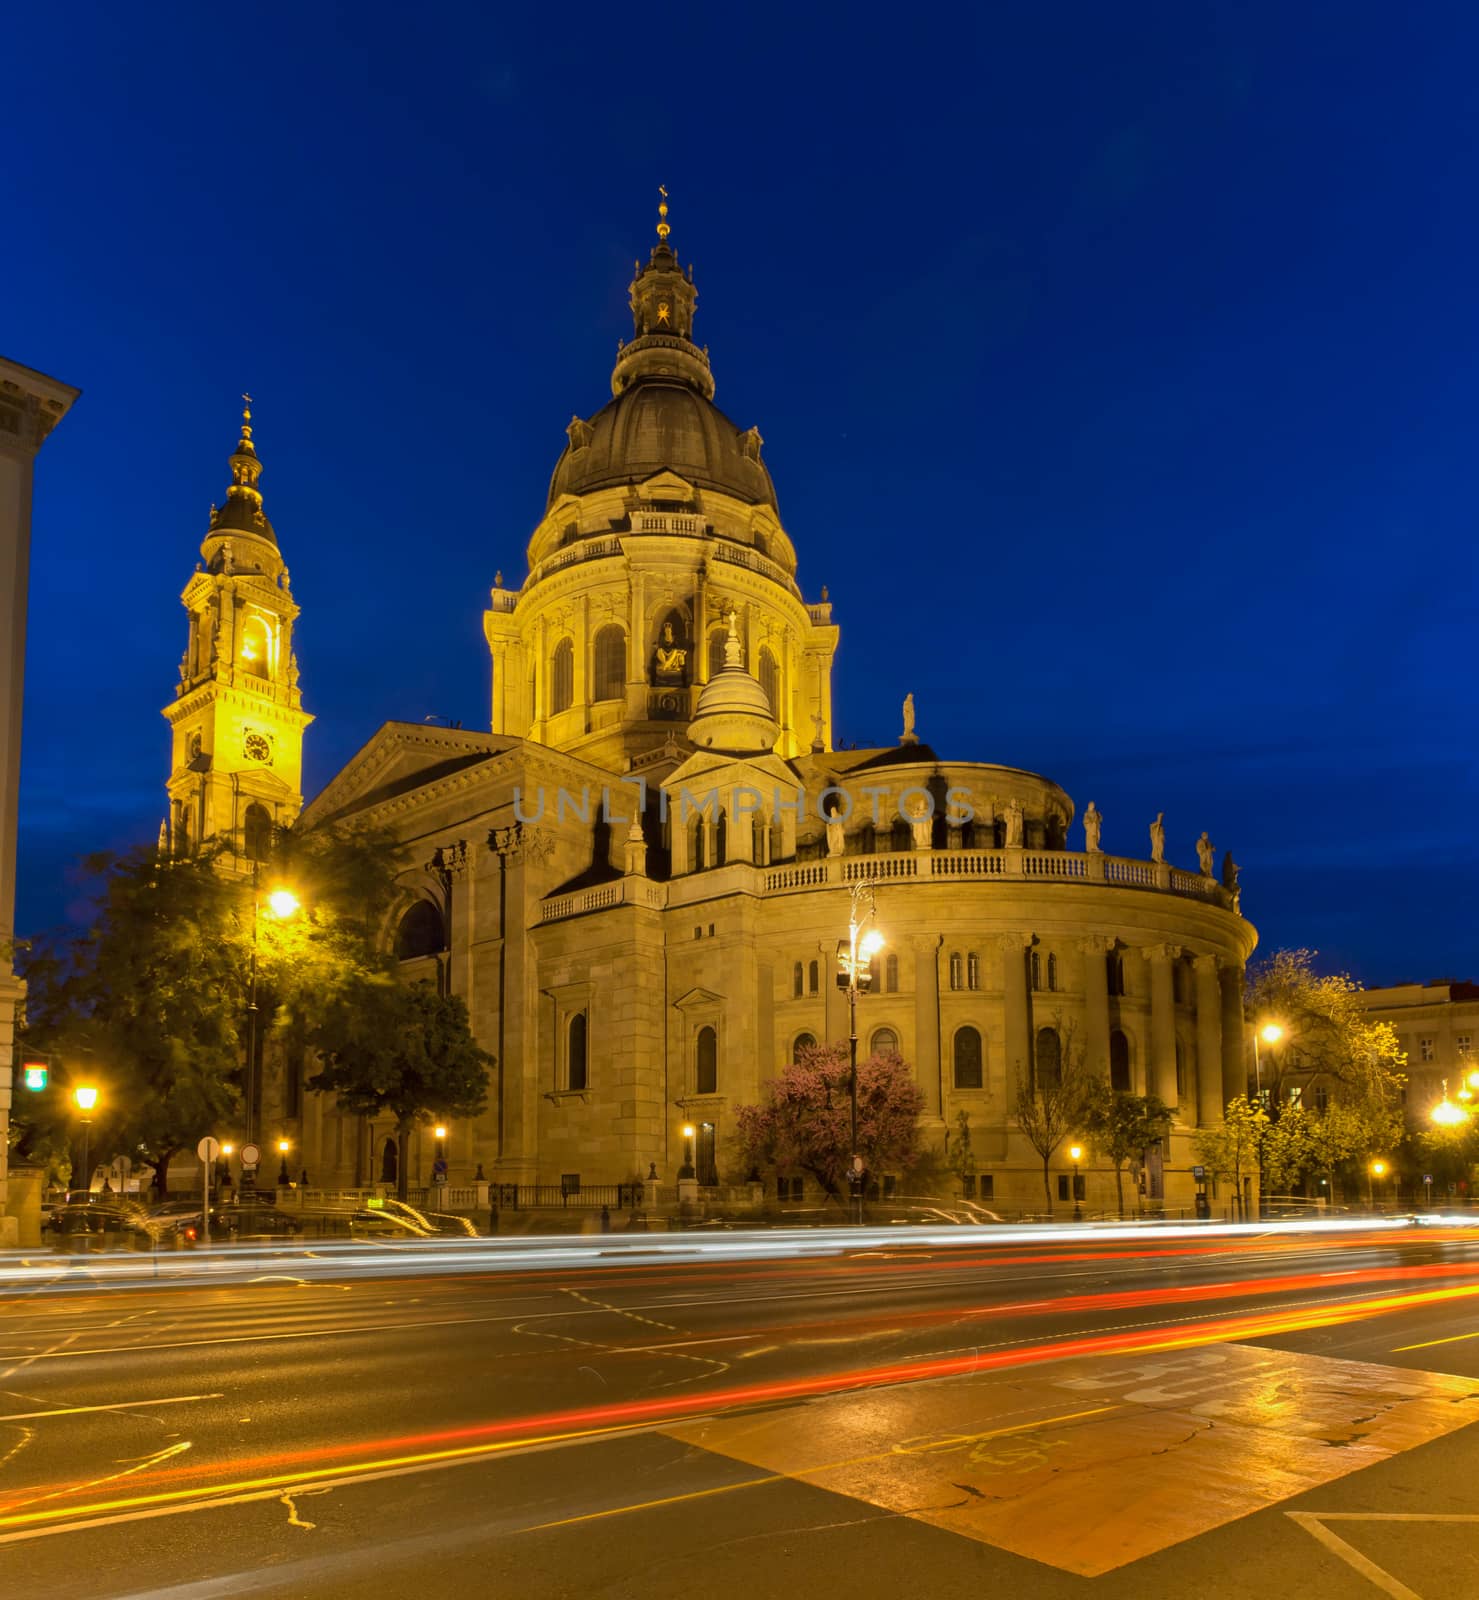 St. Stephens Basilica in Budapest, Hungary